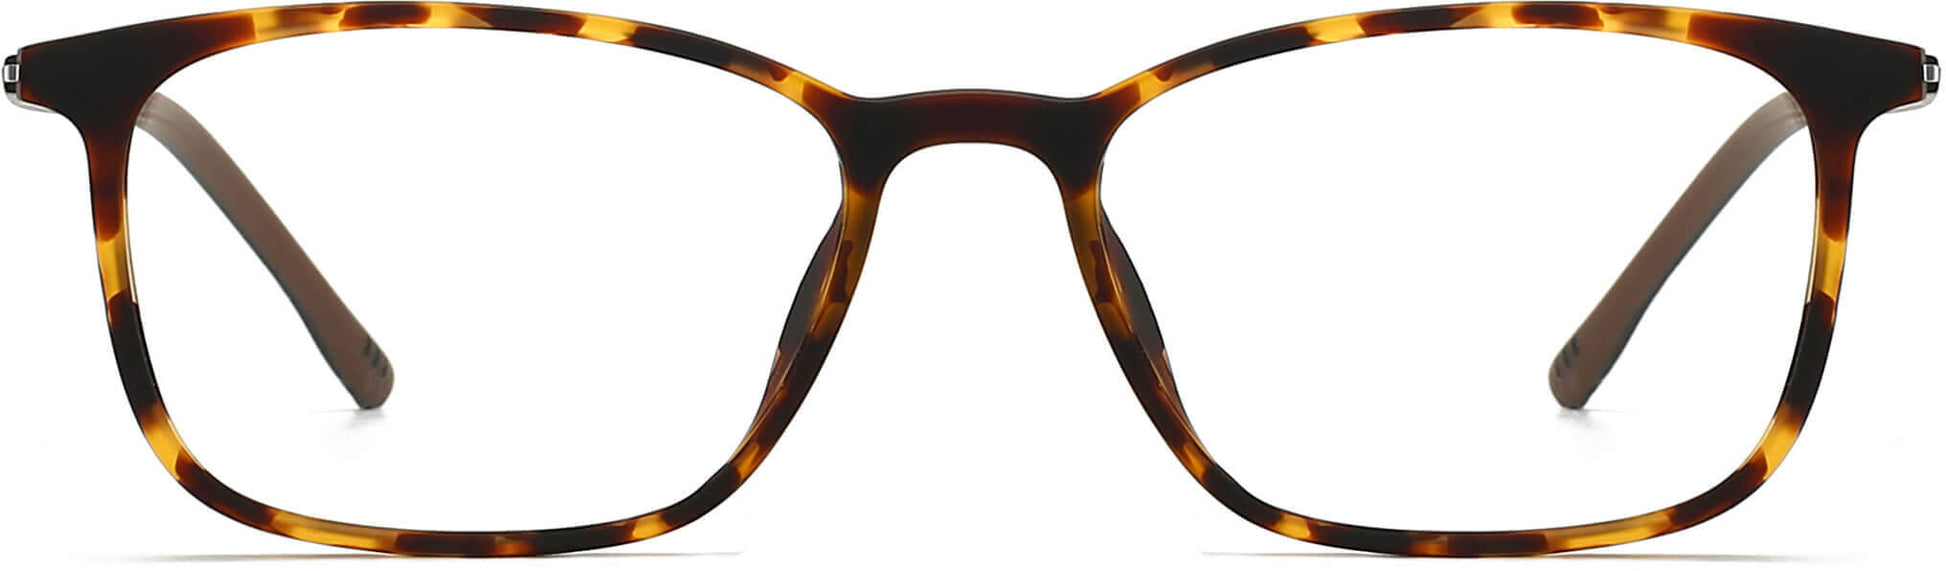 elgrad rectangle tortoise Eyeglasses from ANRRI, front view